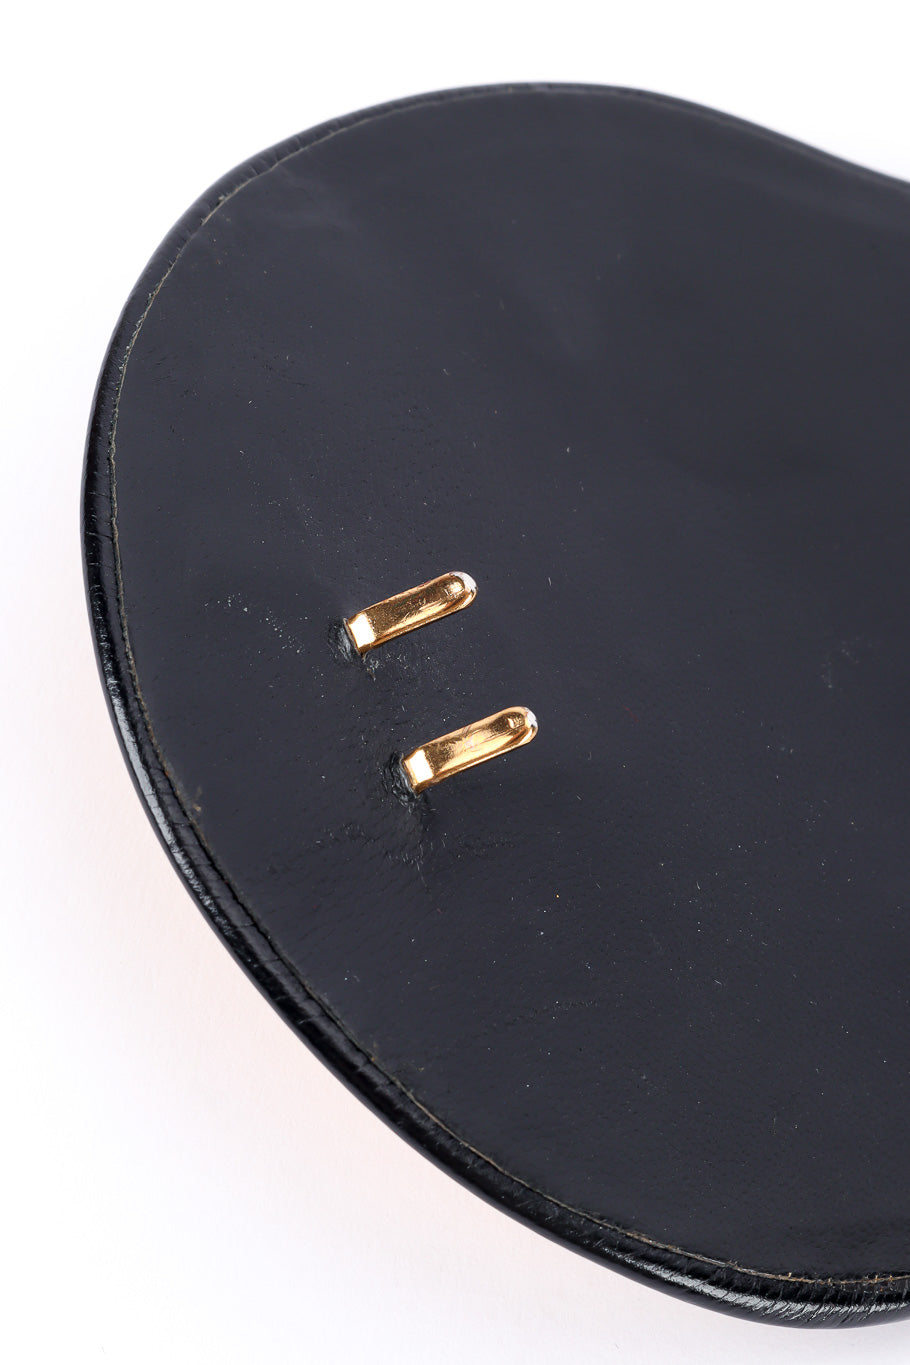 Vintage Harry Rosenfeld Caesar Medallion Leather Belt hook closure closeup @Recessla